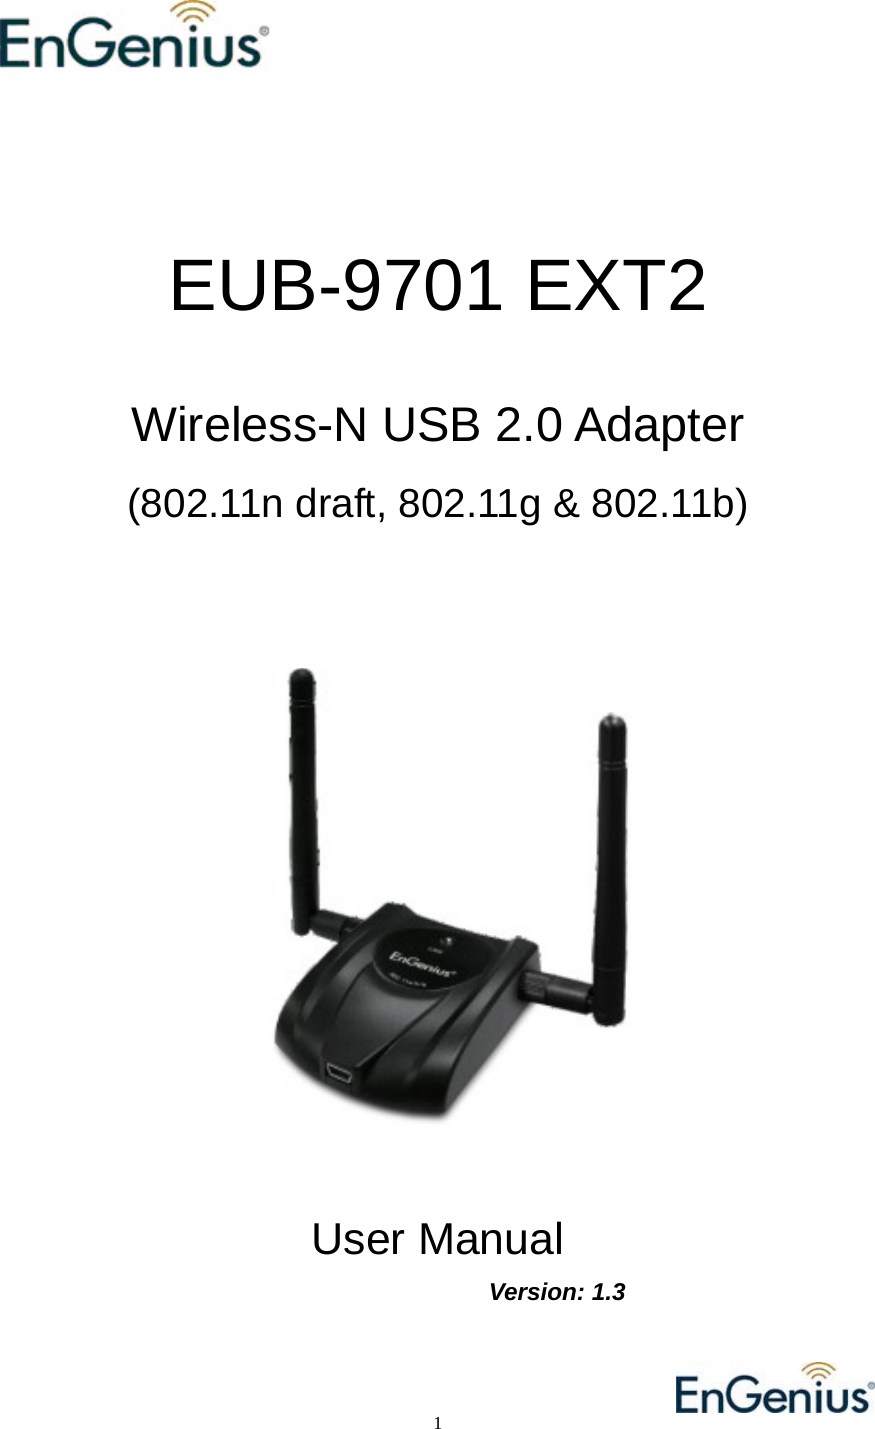                                                                                          1                                                                               EUB-9701 EXT2  Wireless-N USB 2.0 Adapter  (802.11n draft, 802.11g &amp; 802.11b)     User Manual    Version: 1.3  